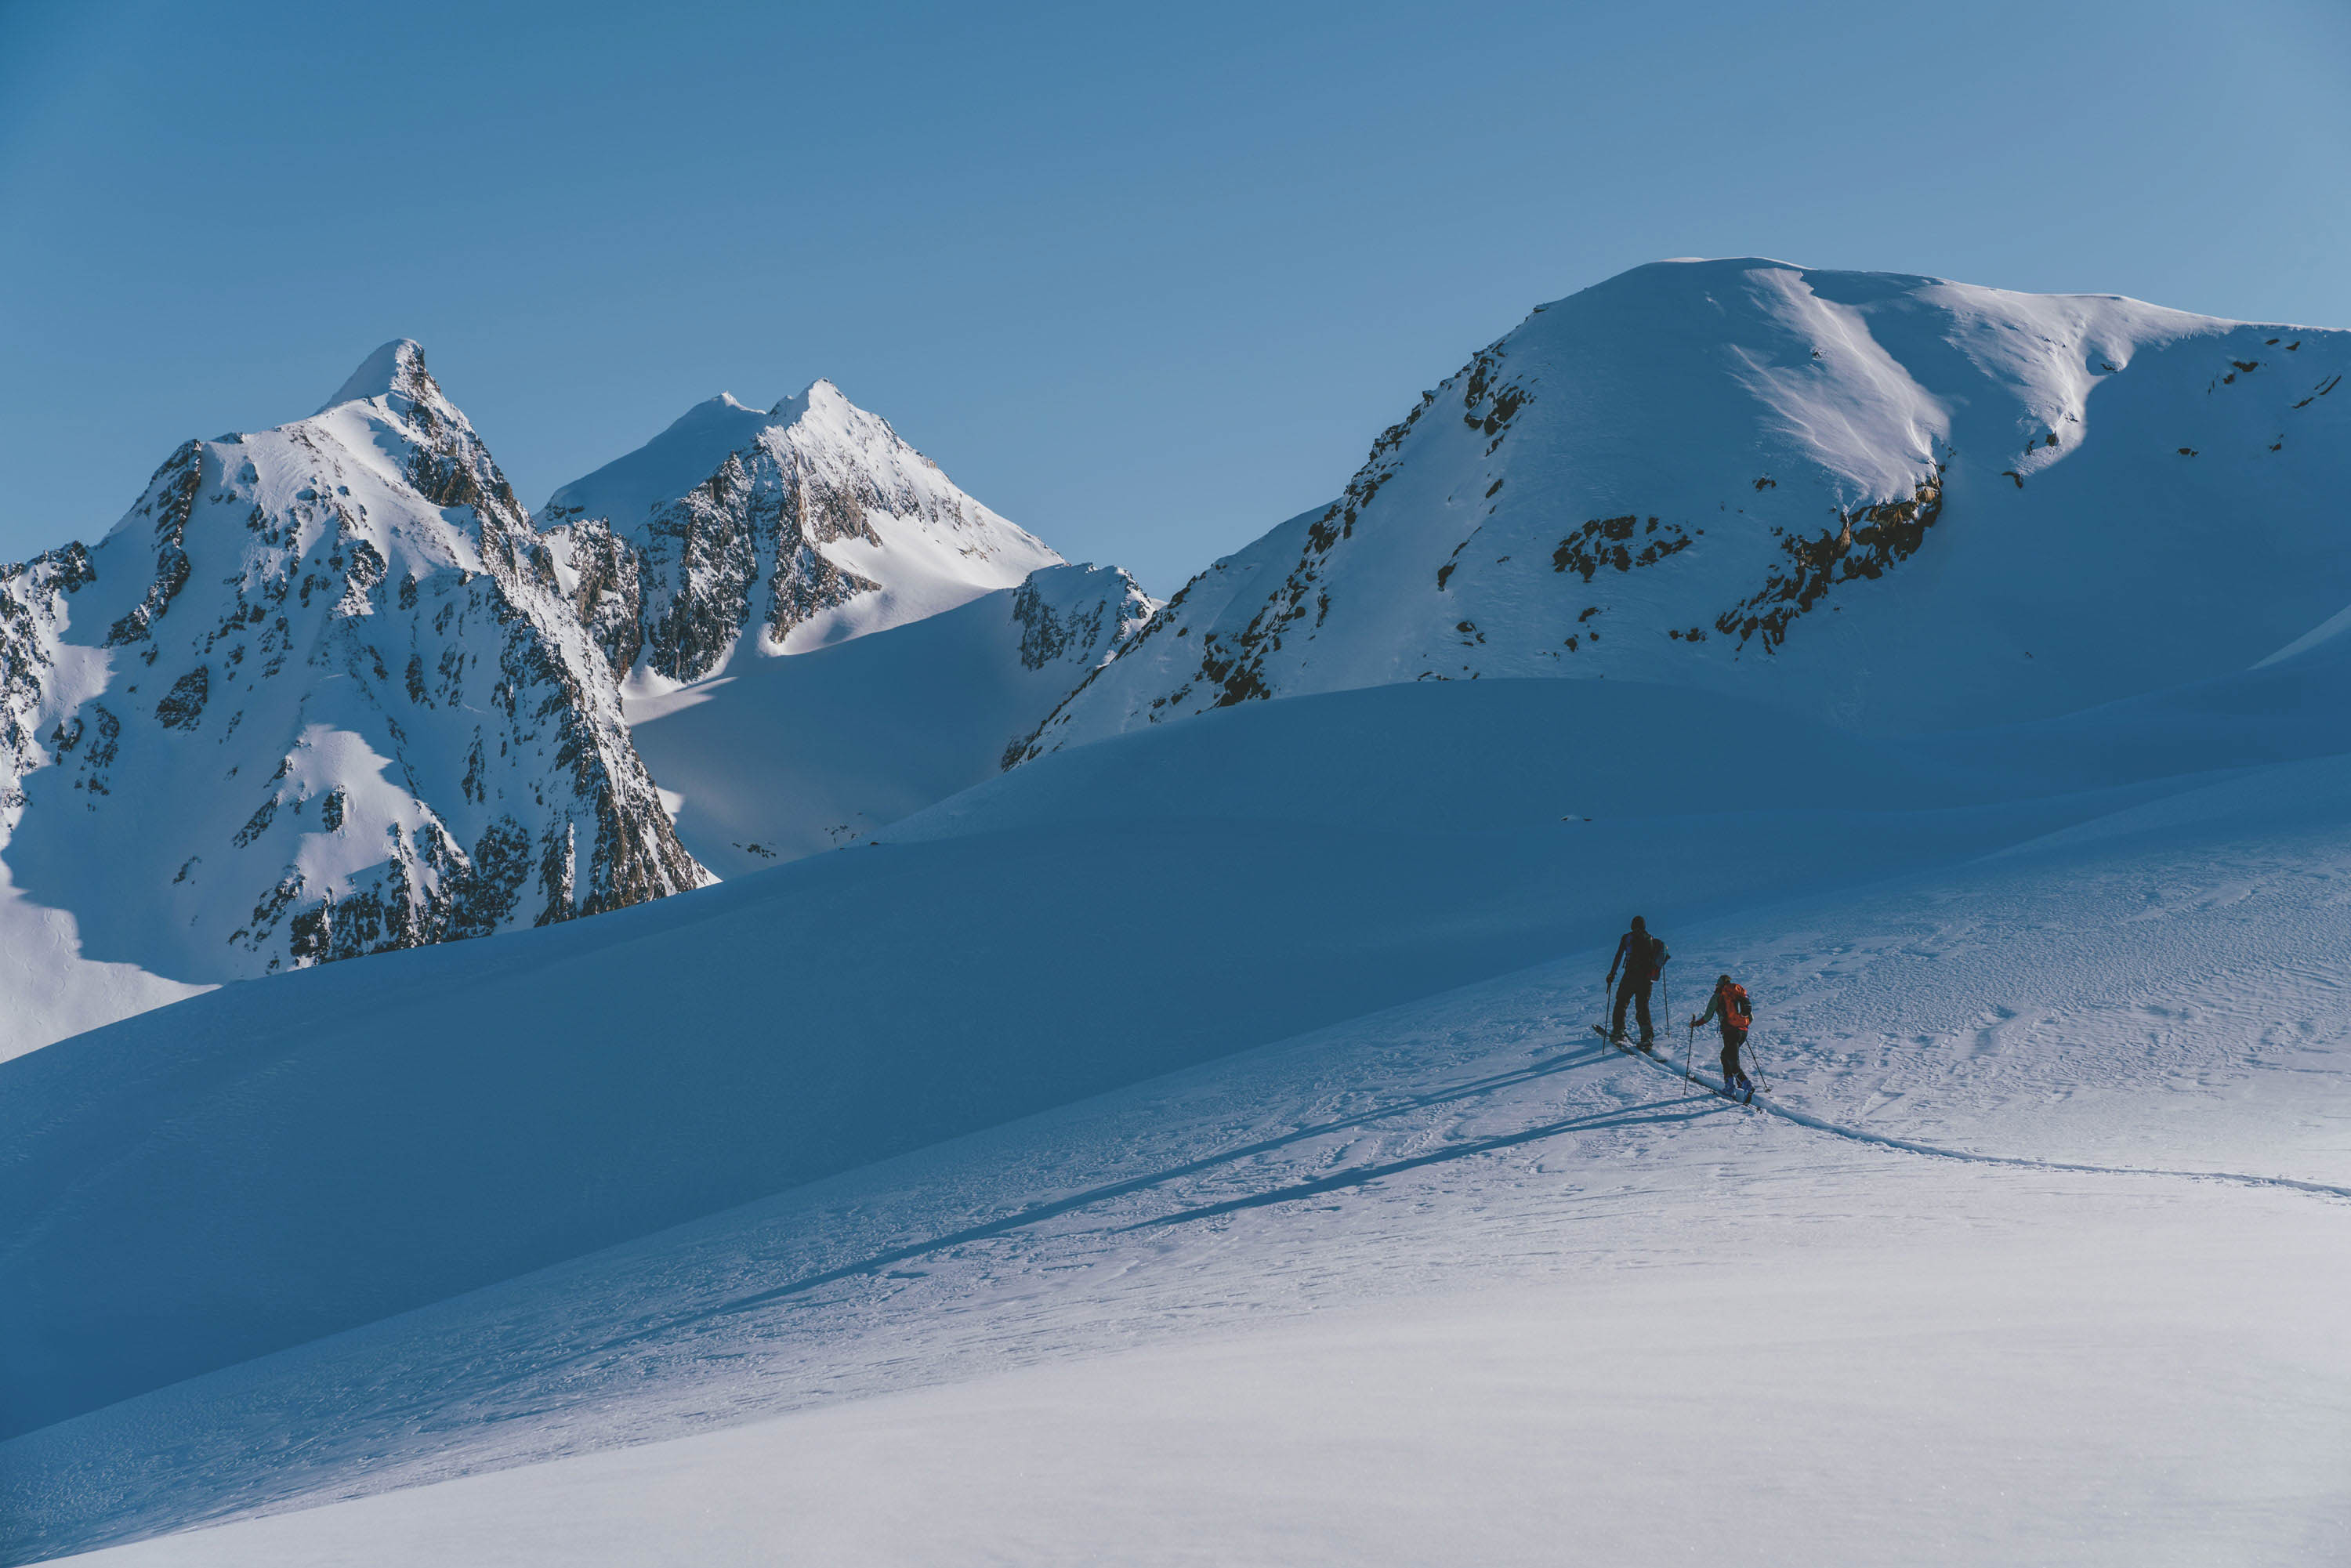 Skitour, splitboard, Ötztal, best mountain photos